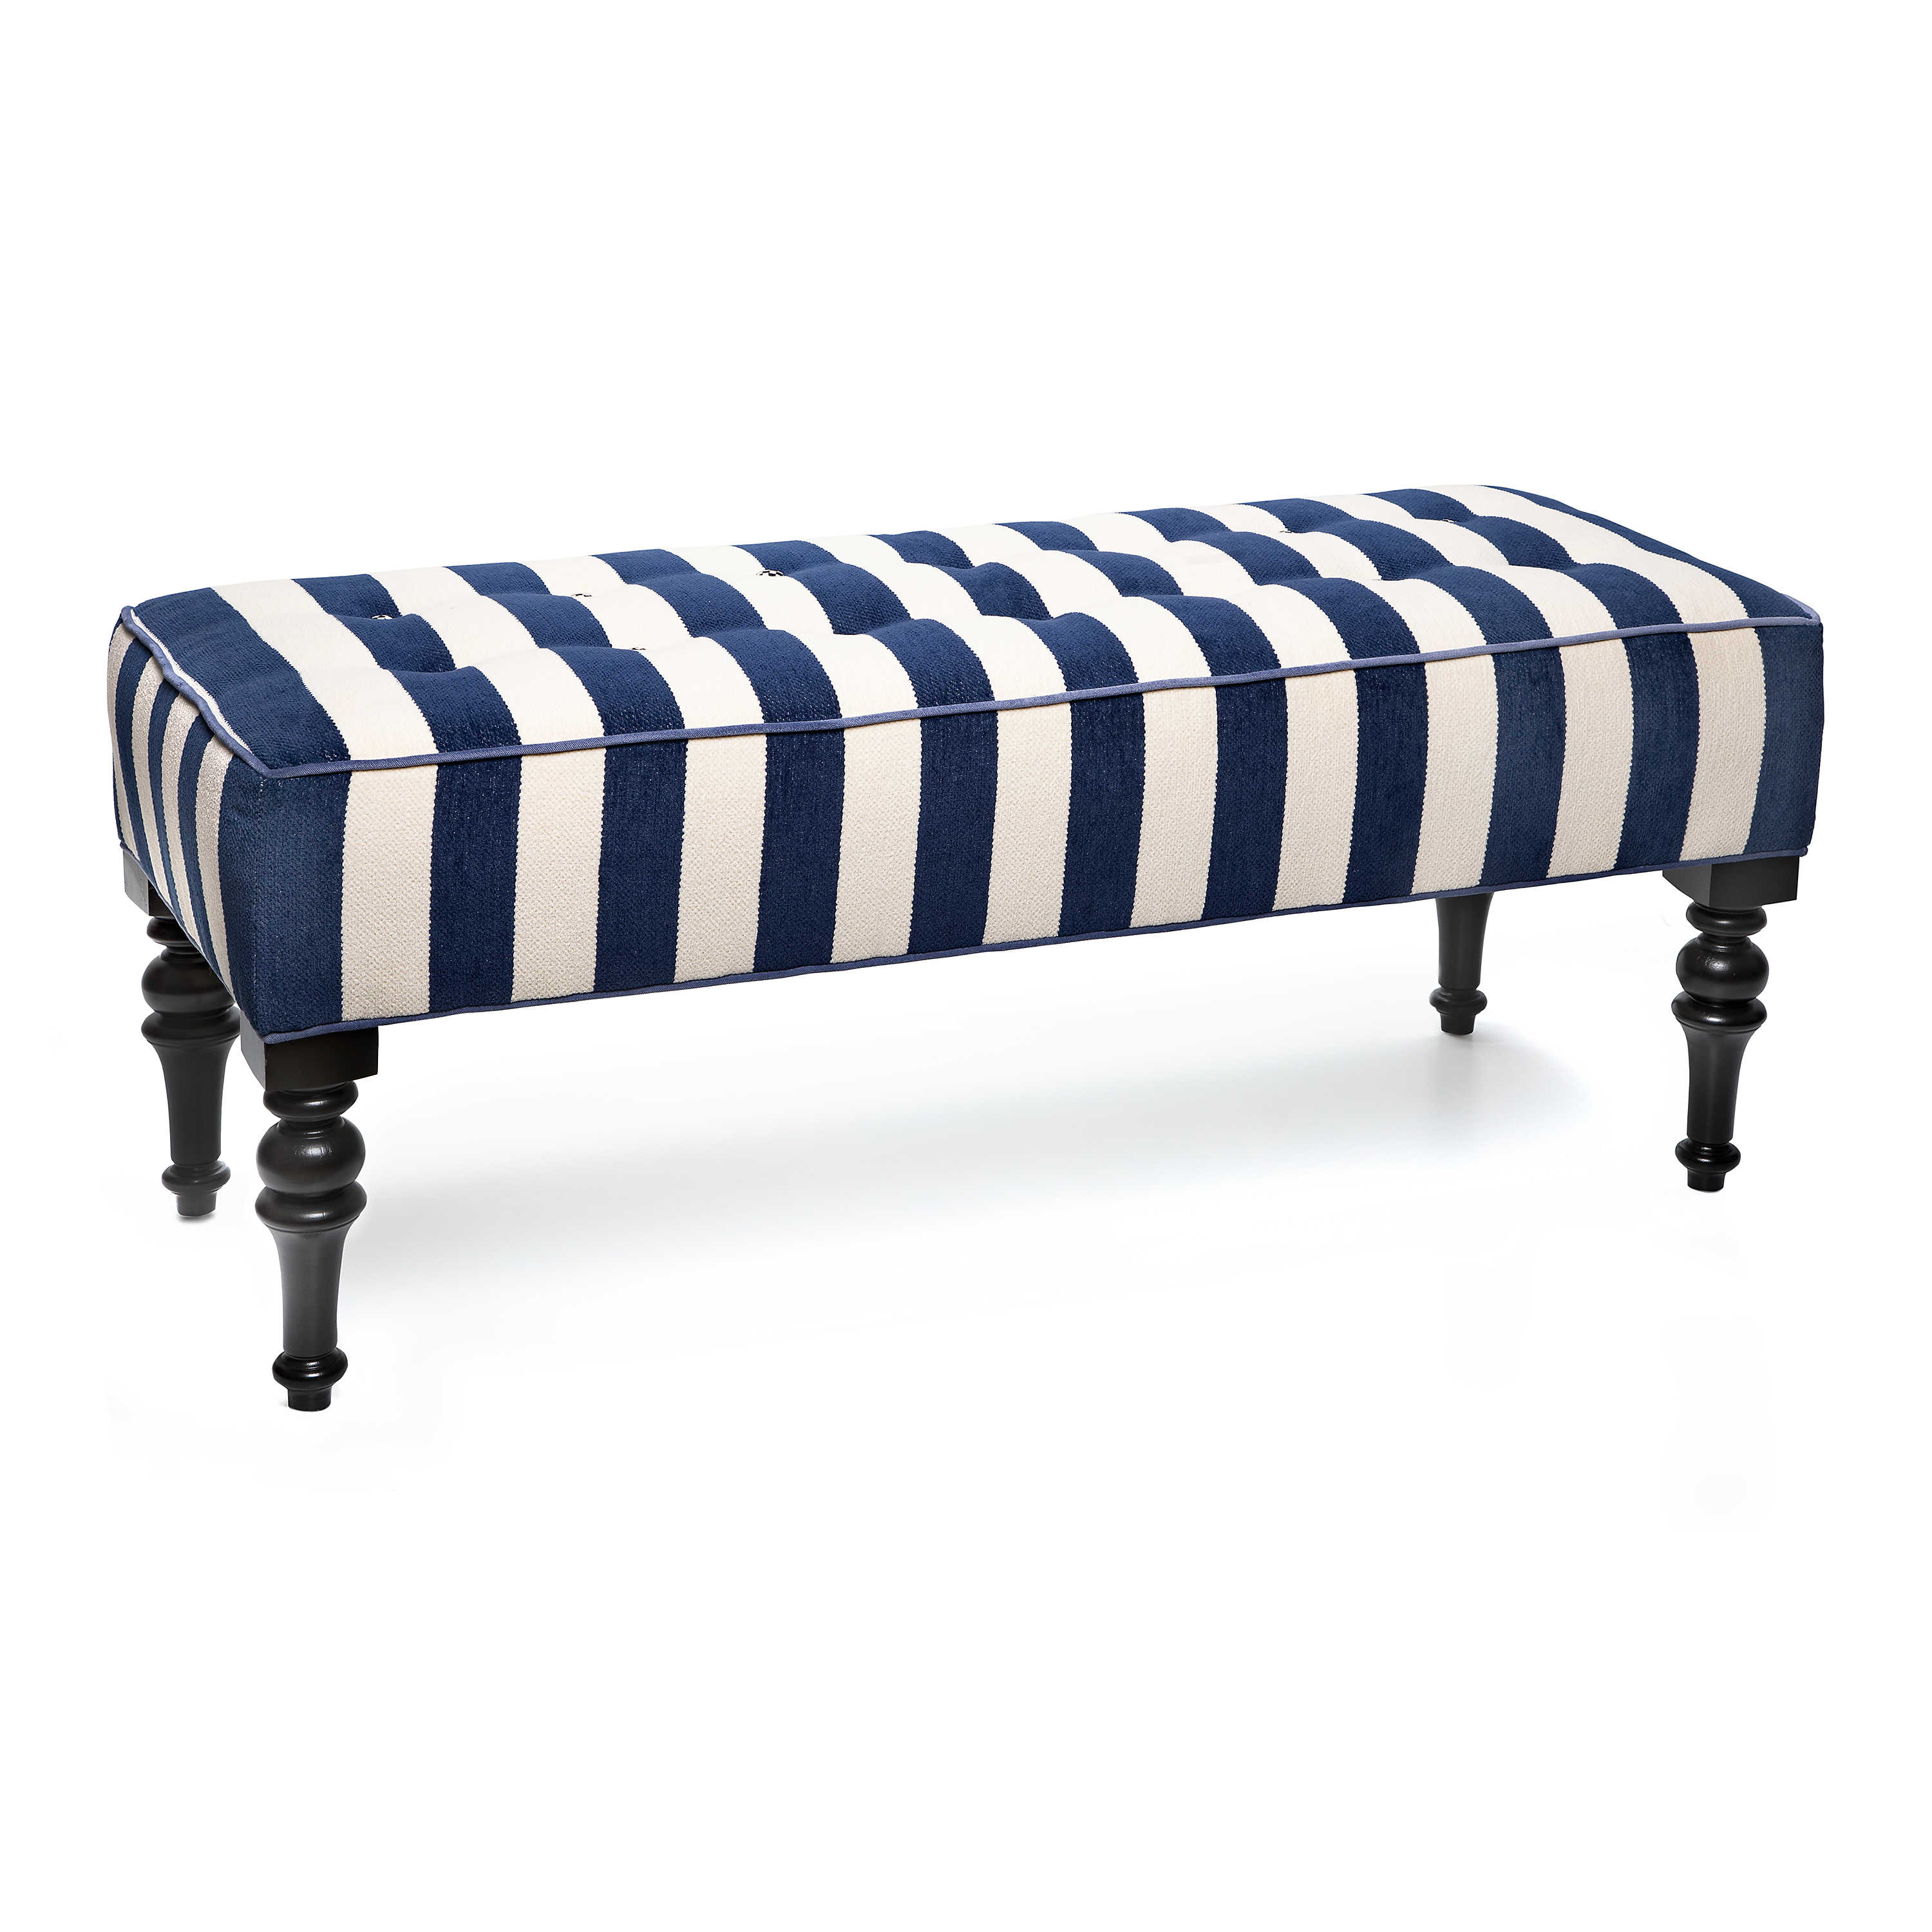 Marquee Navy Stripe Chenille Upholstered Bench mackenzie-childs Panama 0